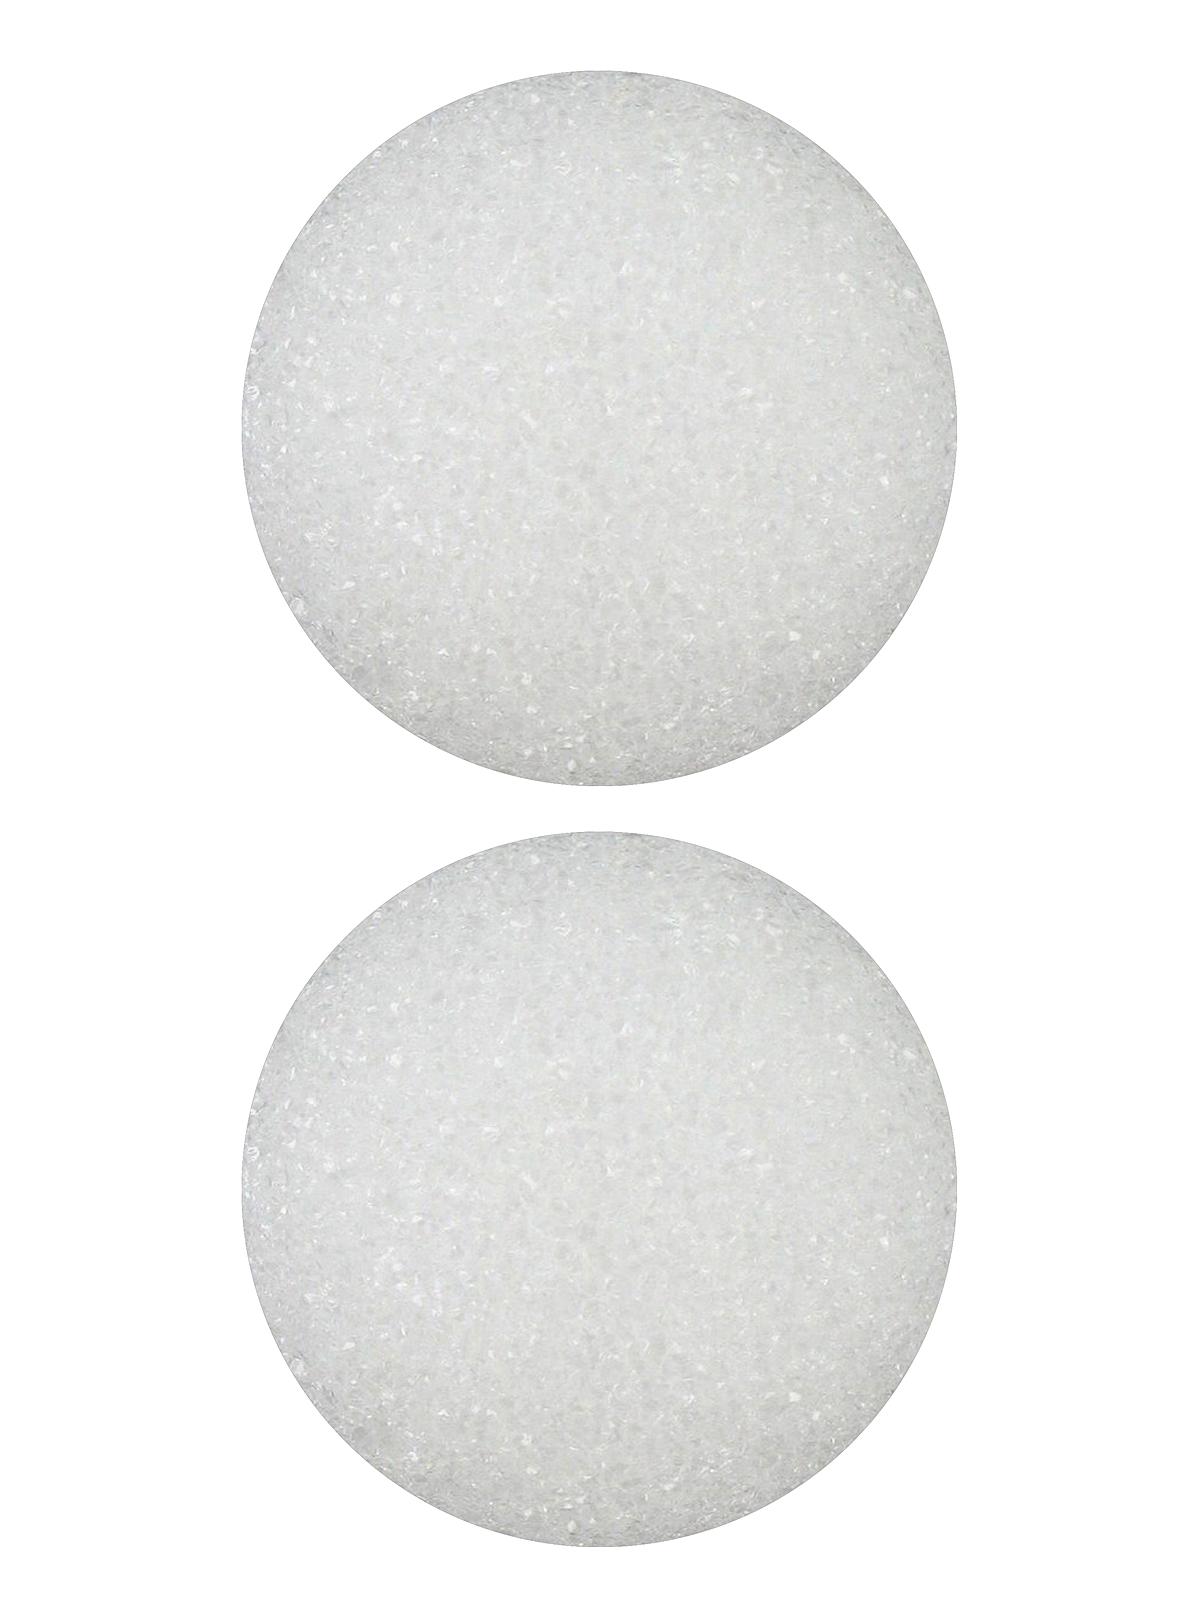 Styrofoam Snowballs 4 In. Pack Of 2